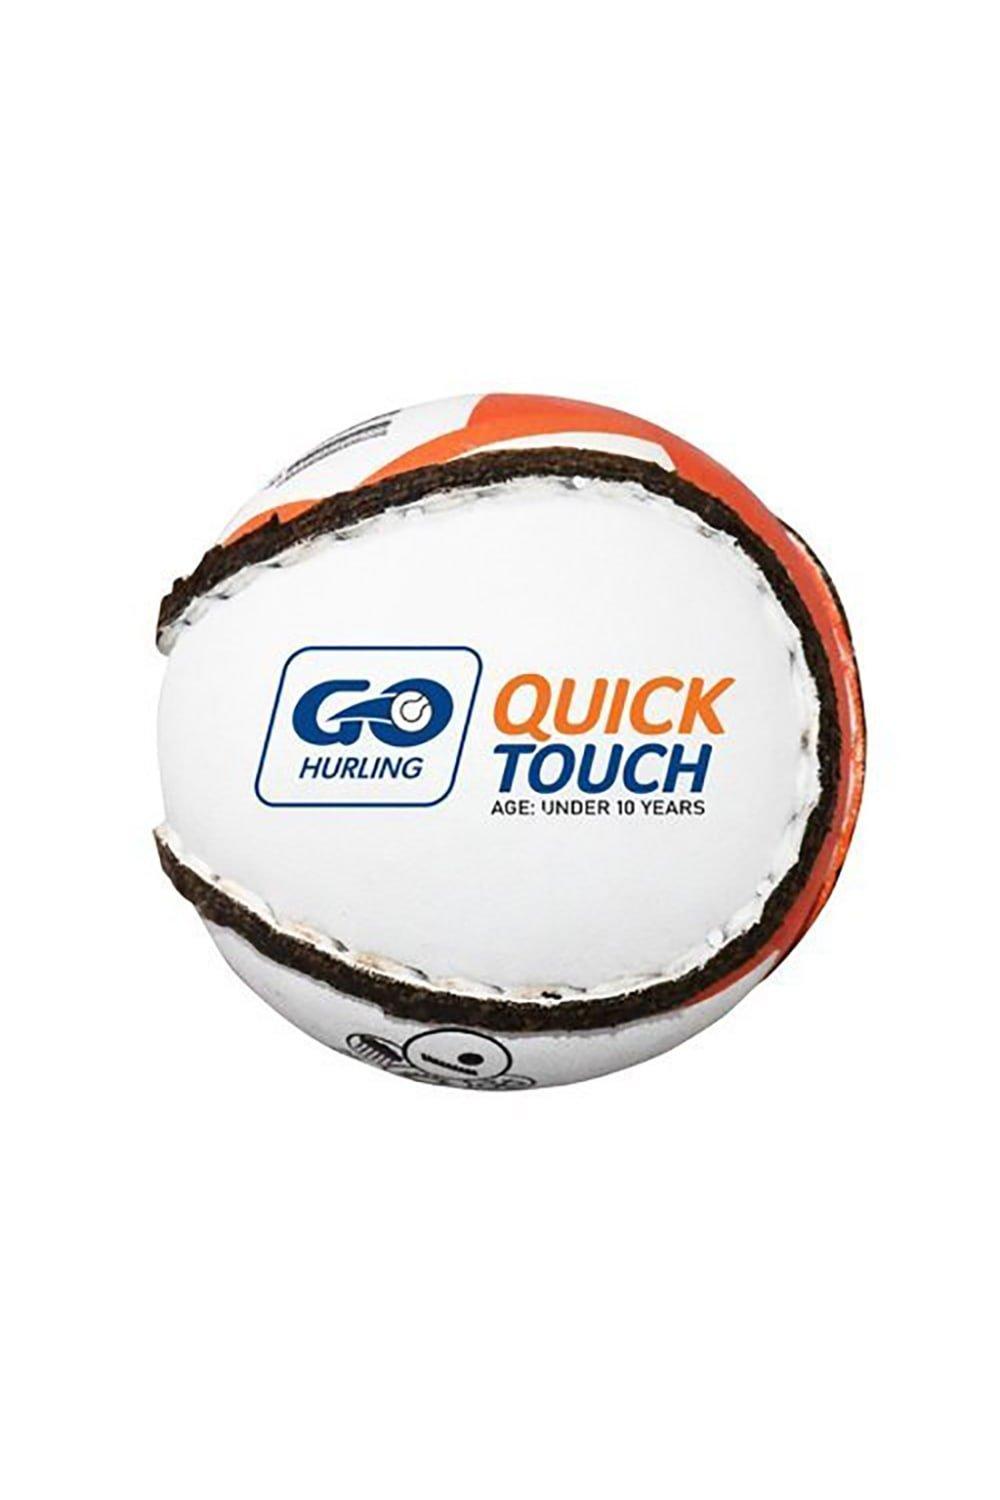 Quick Touch Hurling Sliotar Ball